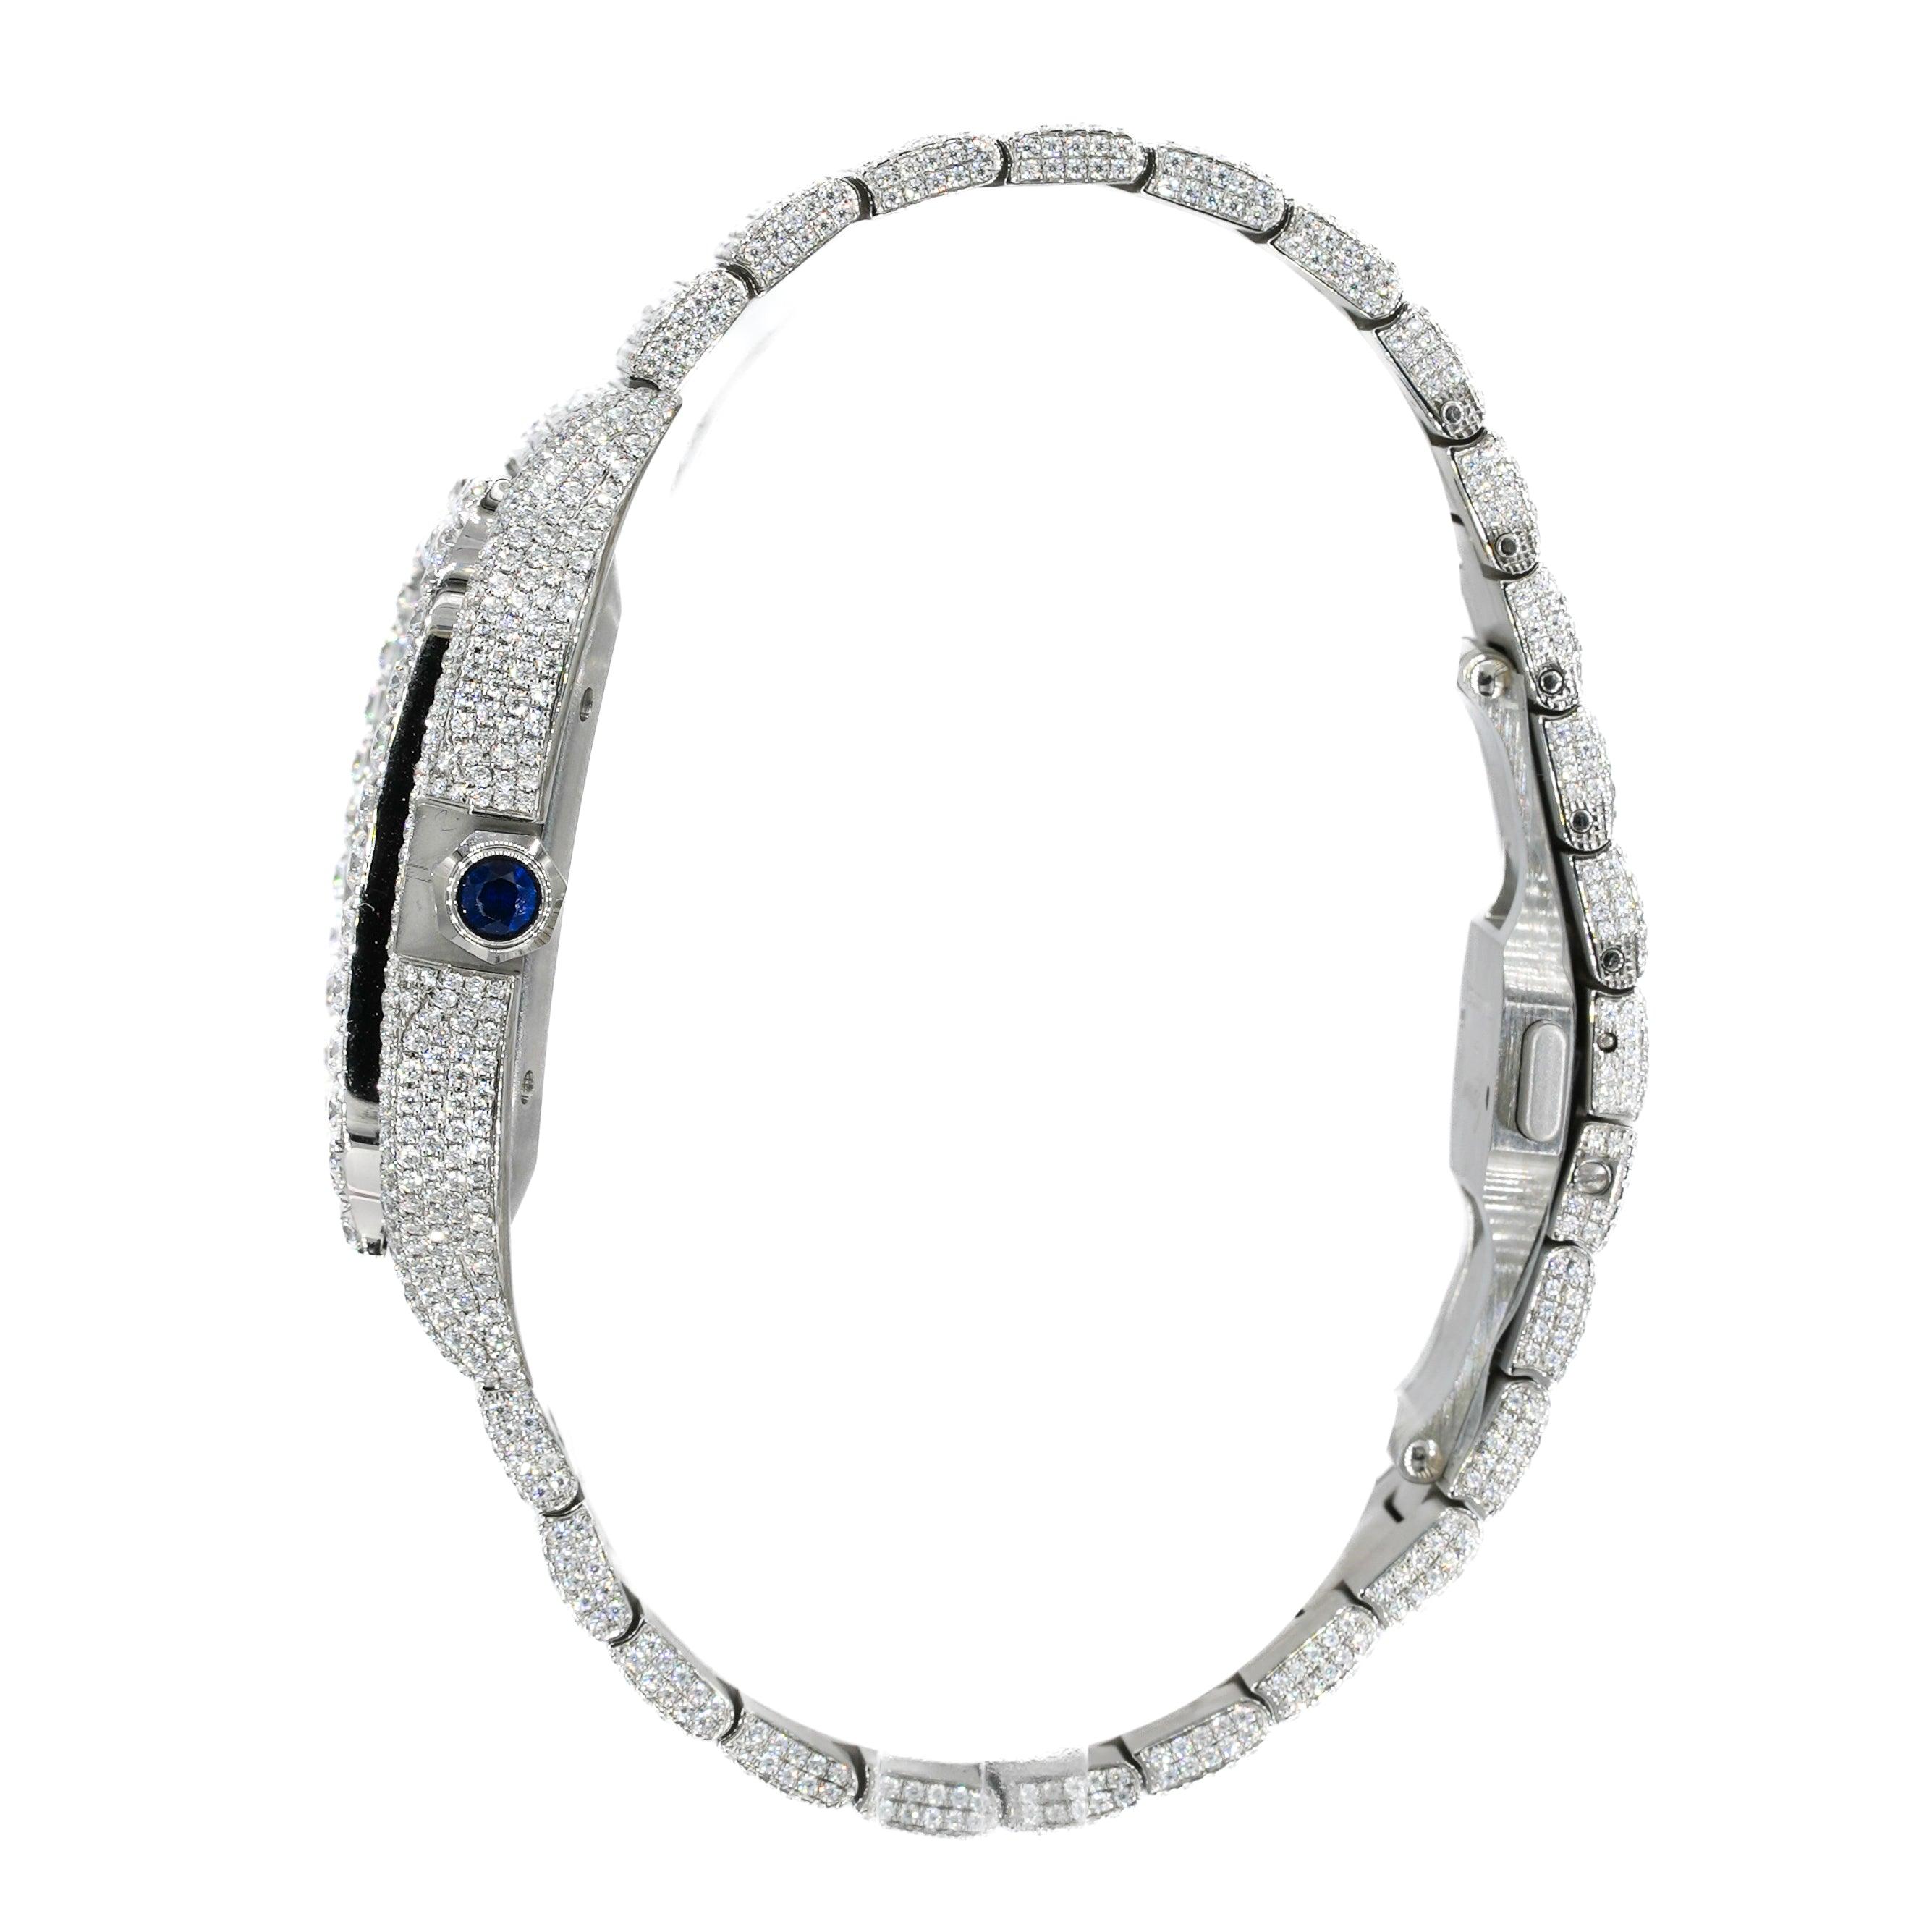 cartier moissanite-diamond-watch